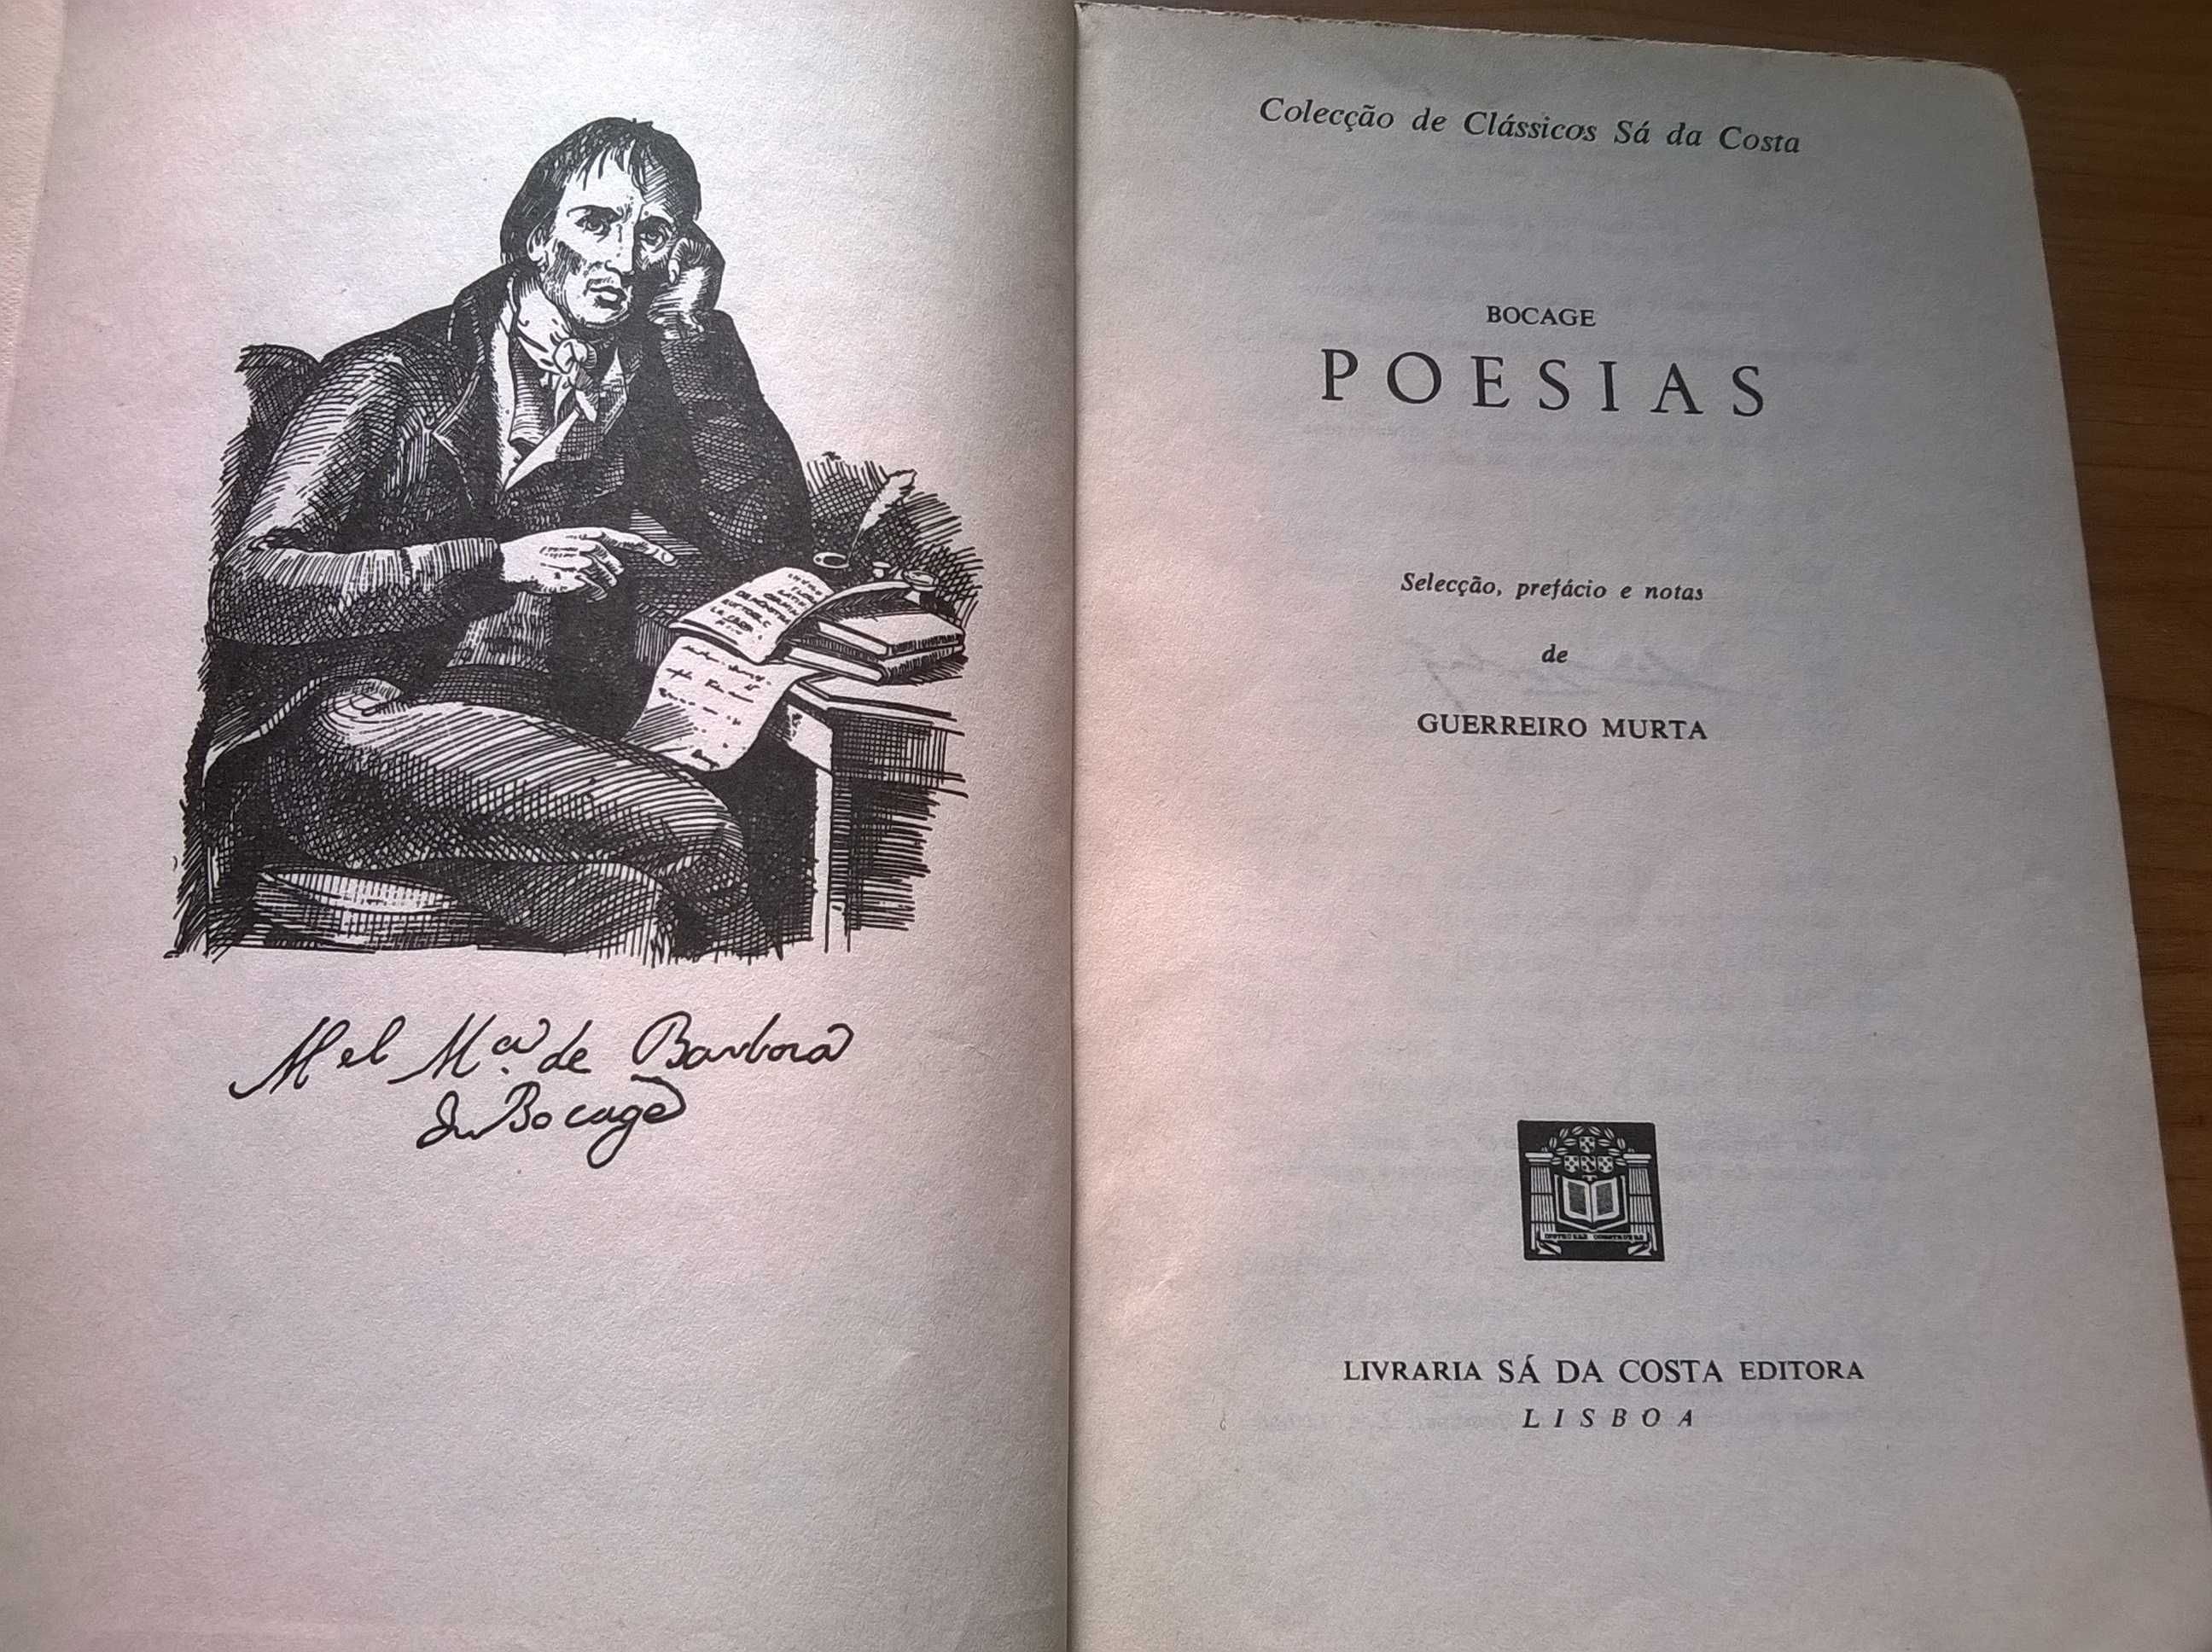 Bocage Poesias - Manuel Maria Barbosa du Bocage